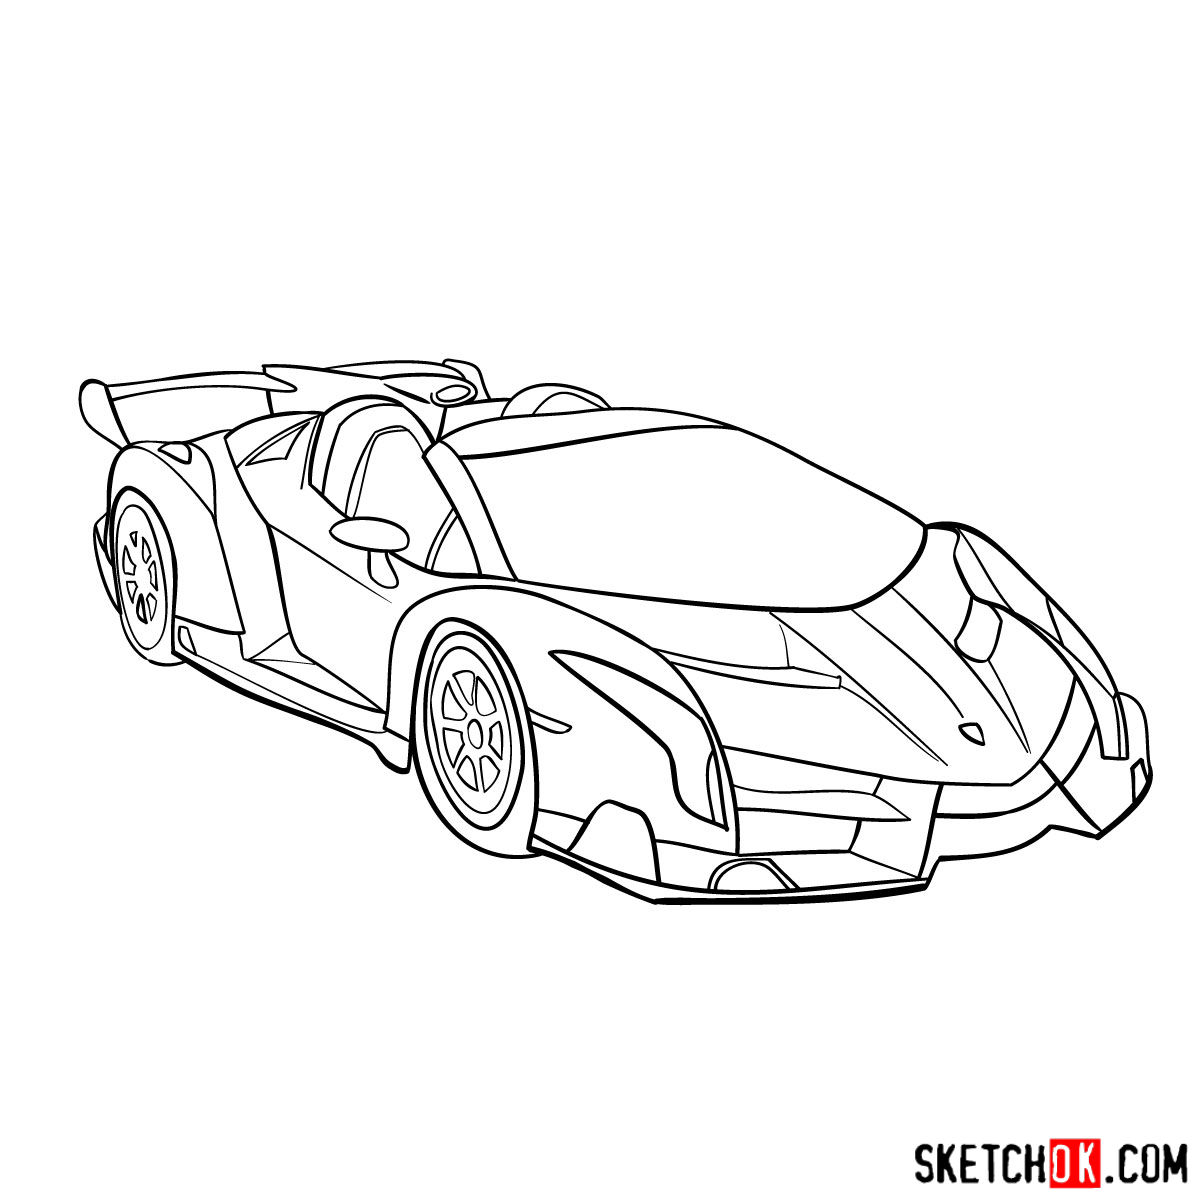 How to draw Lamborghini Veneno - Step by step drawing ...